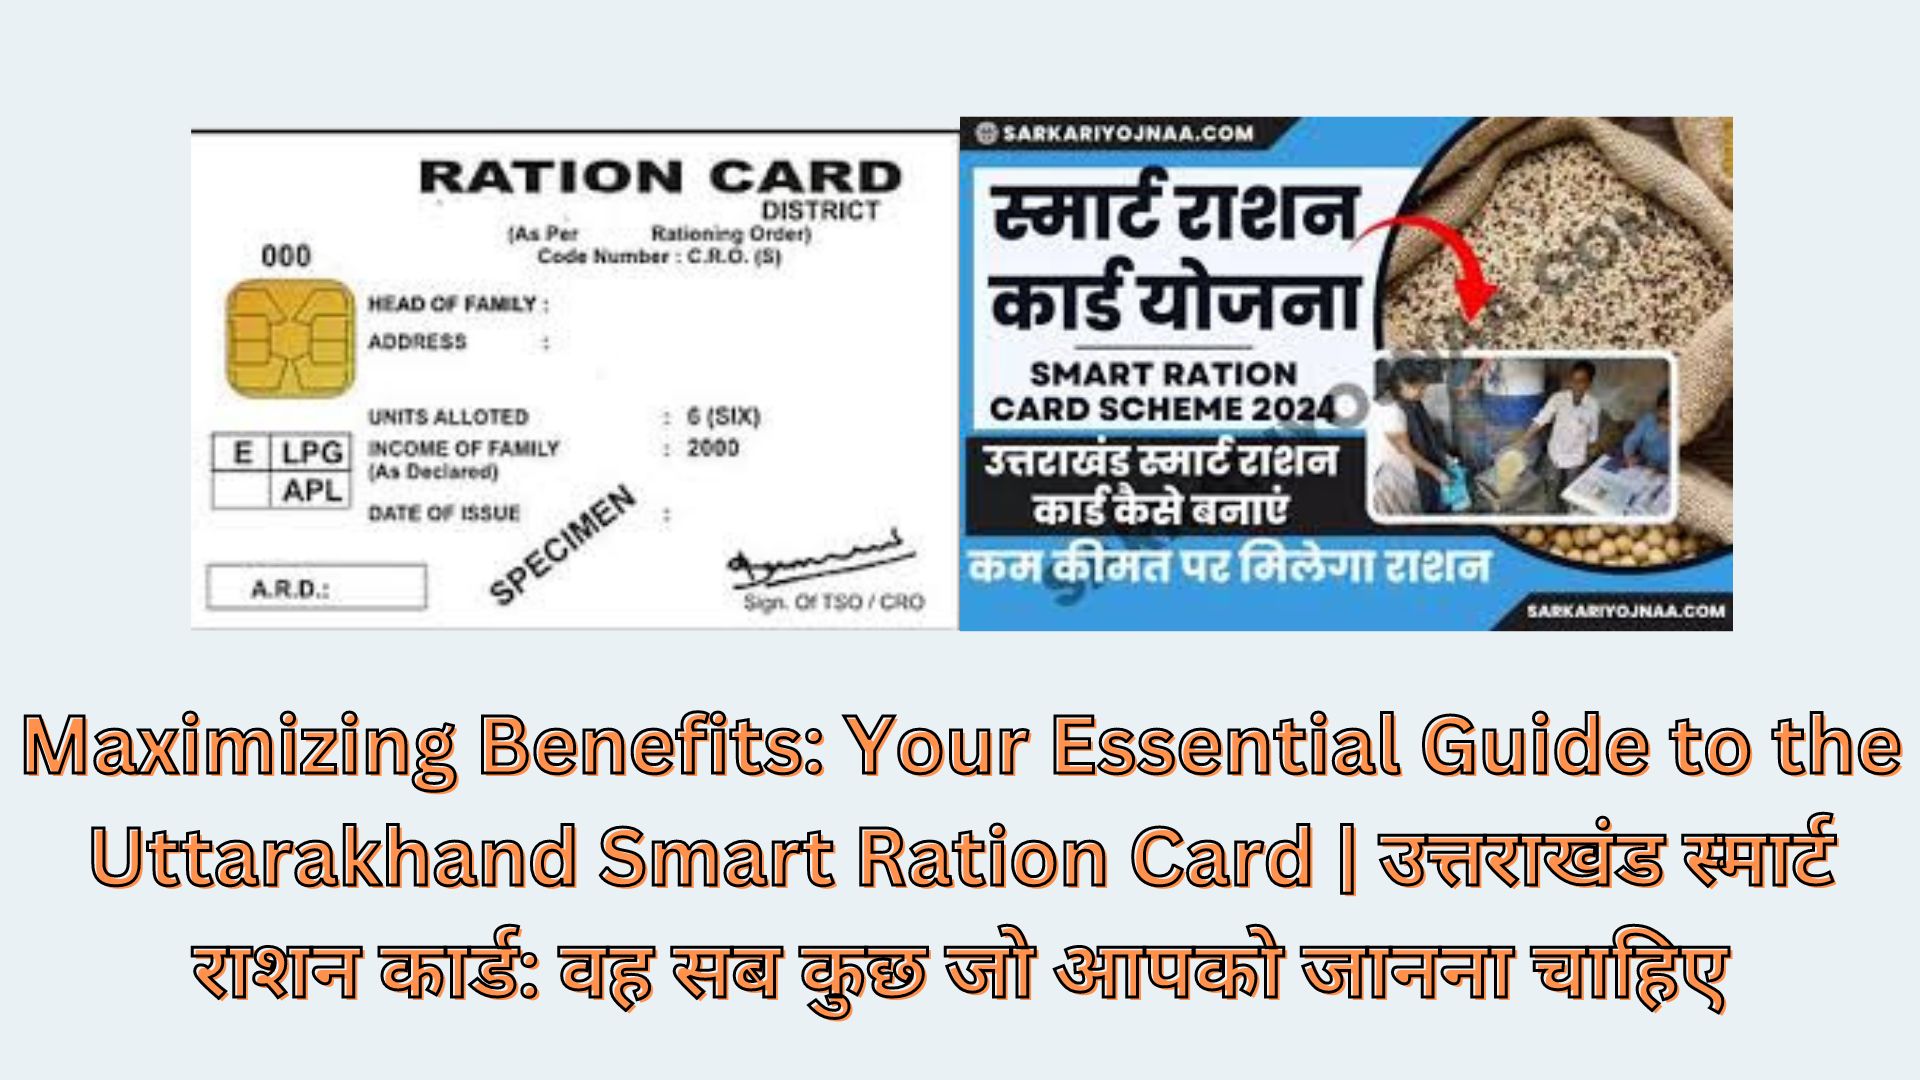 Maximizing Benefits: Your Essential Guide to the Uttarakhand Smart Ration Card | उत्तराखंड स्मार्ट राशन कार्ड: वह सब कुछ जो आपको जानना चाहिए